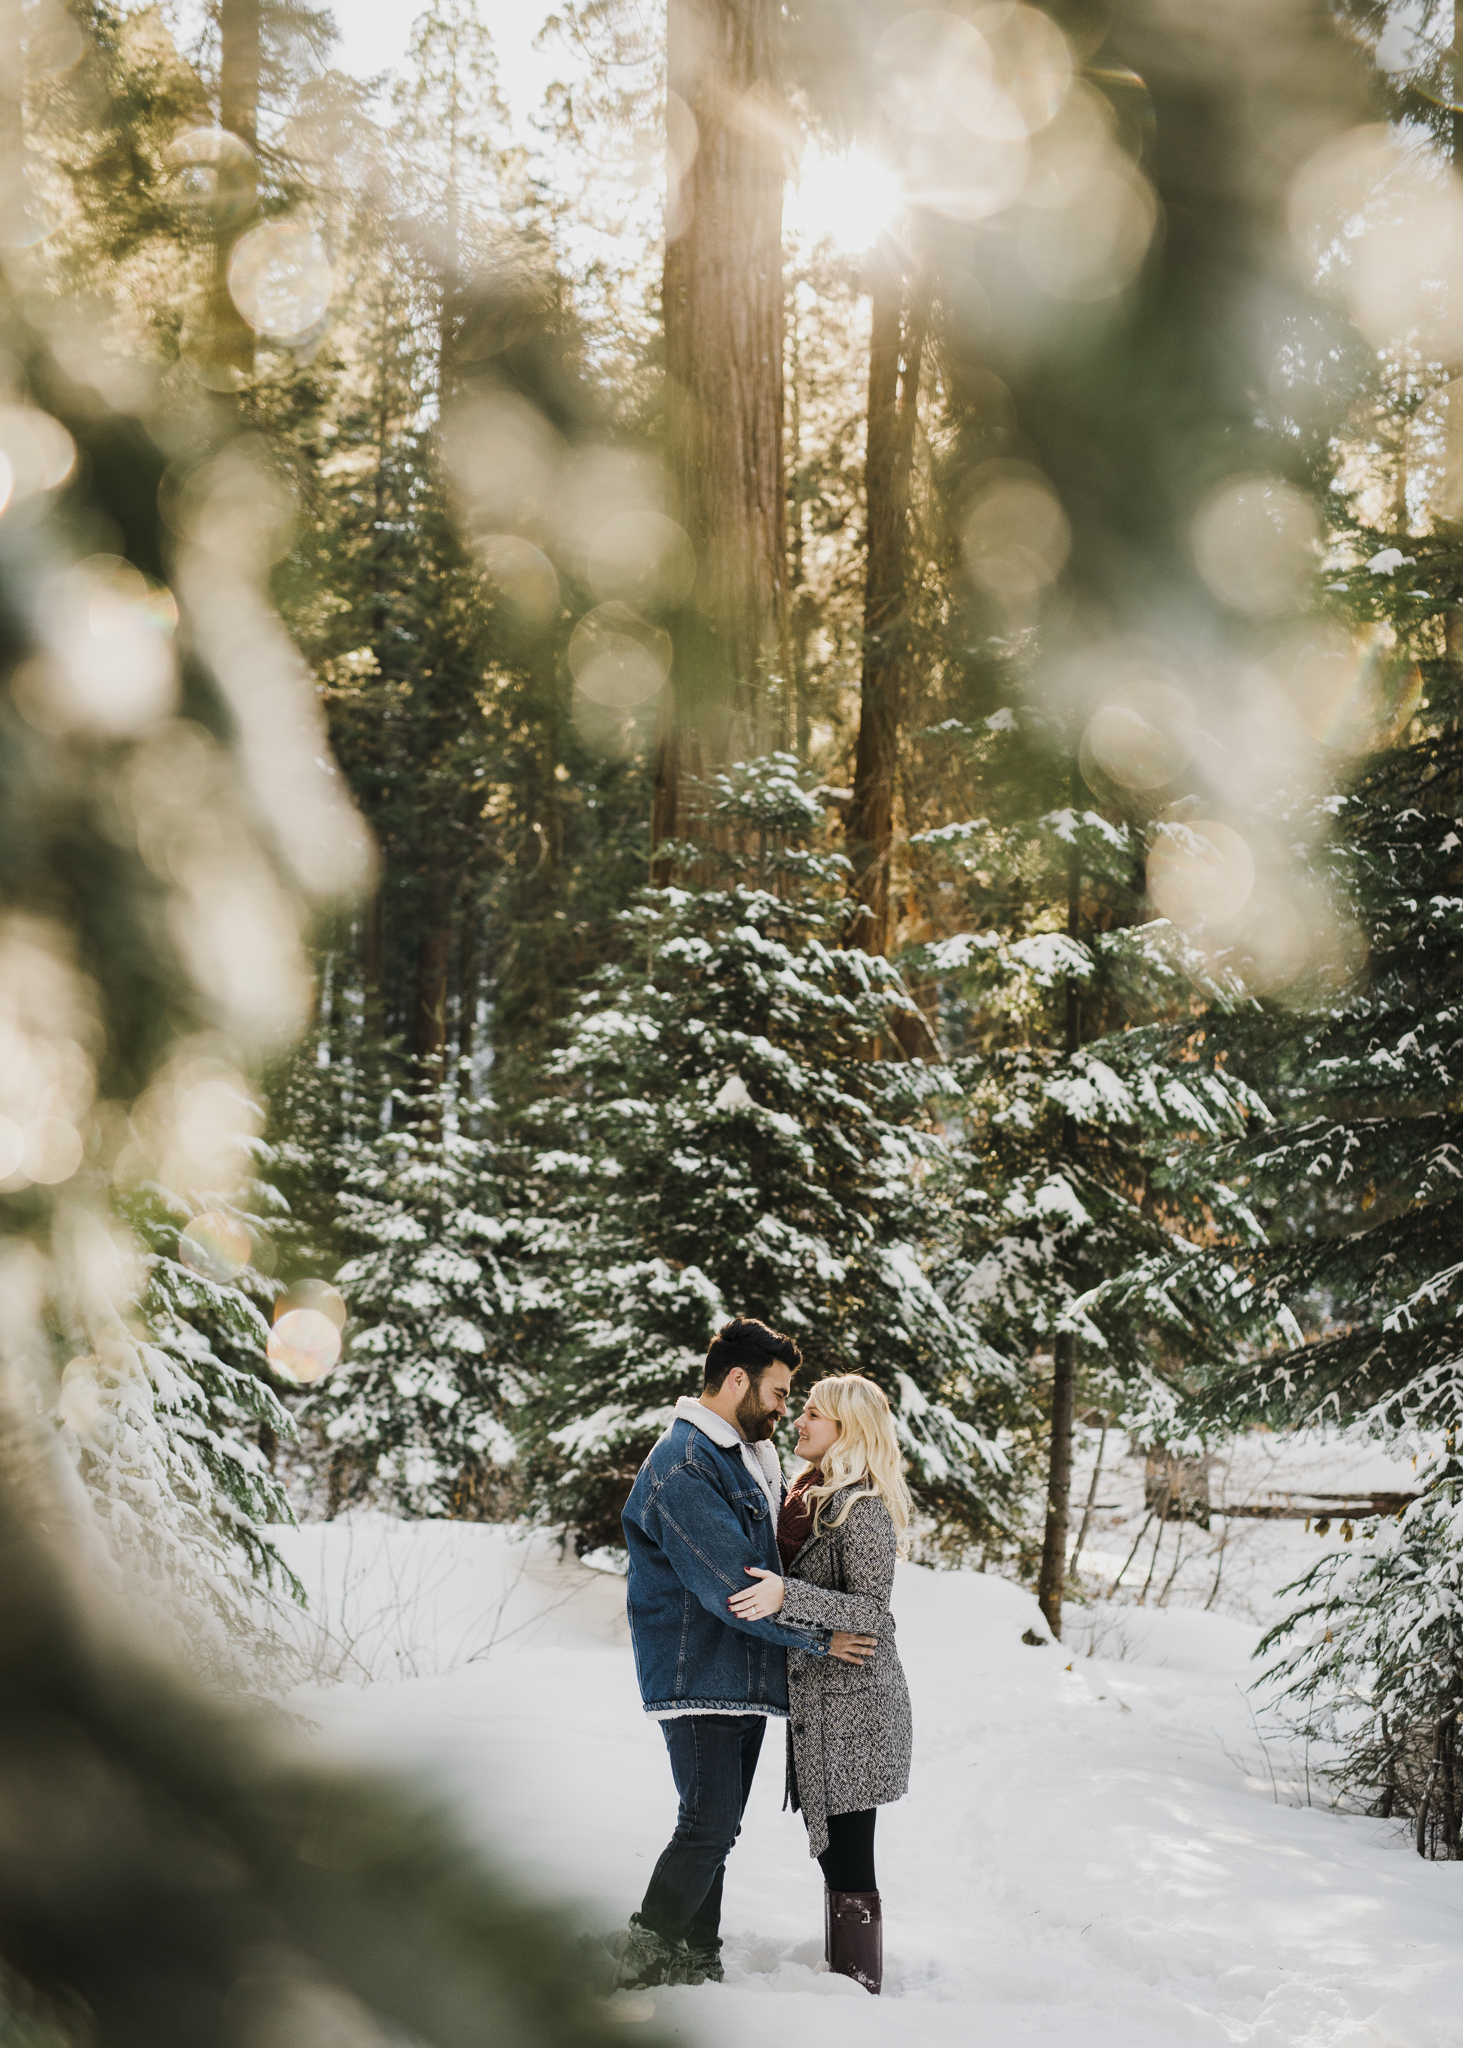 ©Isaiah-&-Taylor-Photography---George-&-Alyssa-Engagement---Sequoia-National-Park,-California-28.jpg